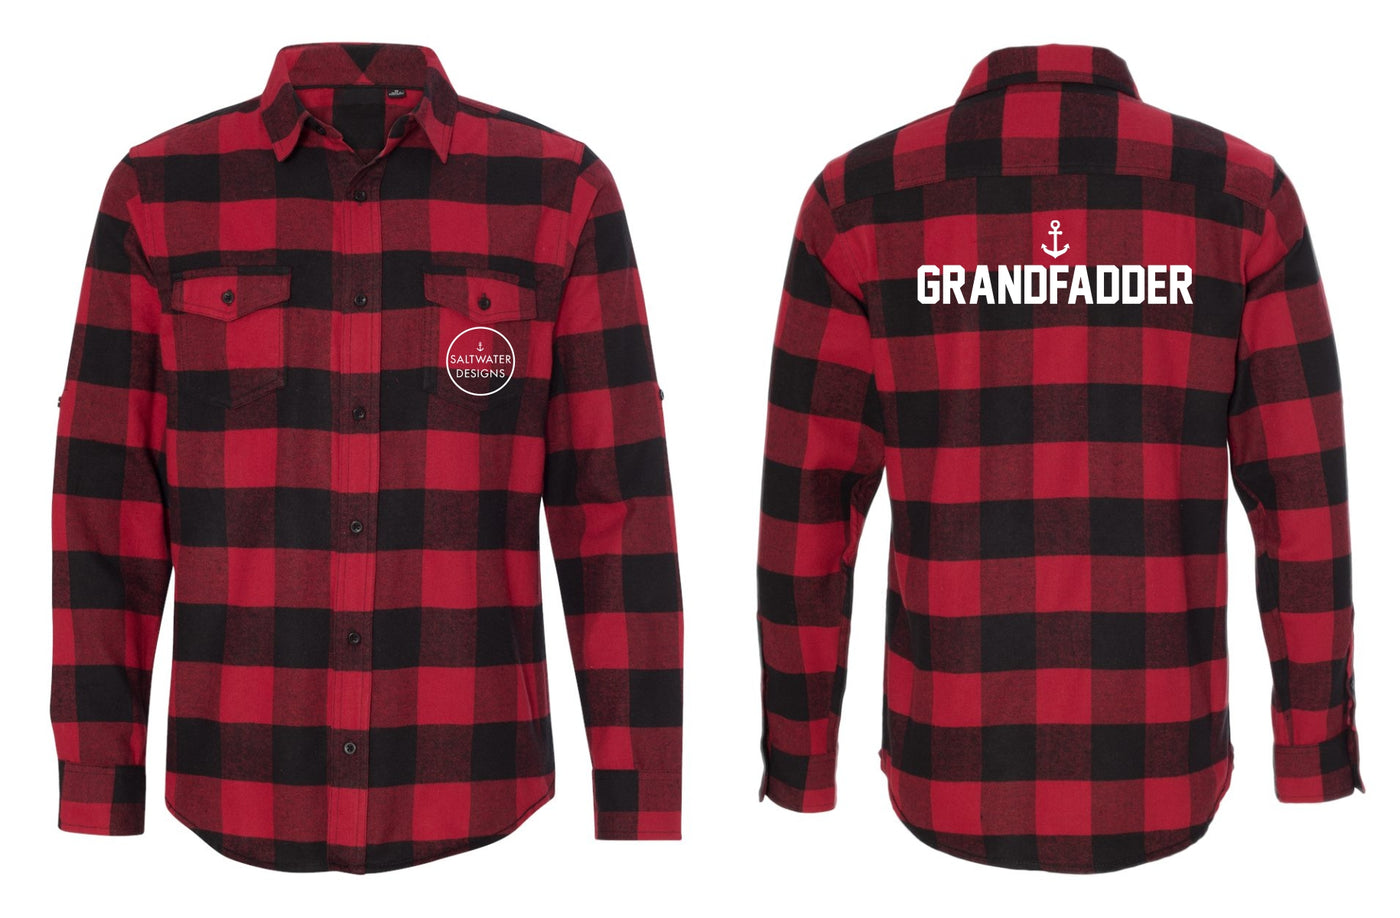 "Grandfadder" Unisex Plaid Flannel Shirt